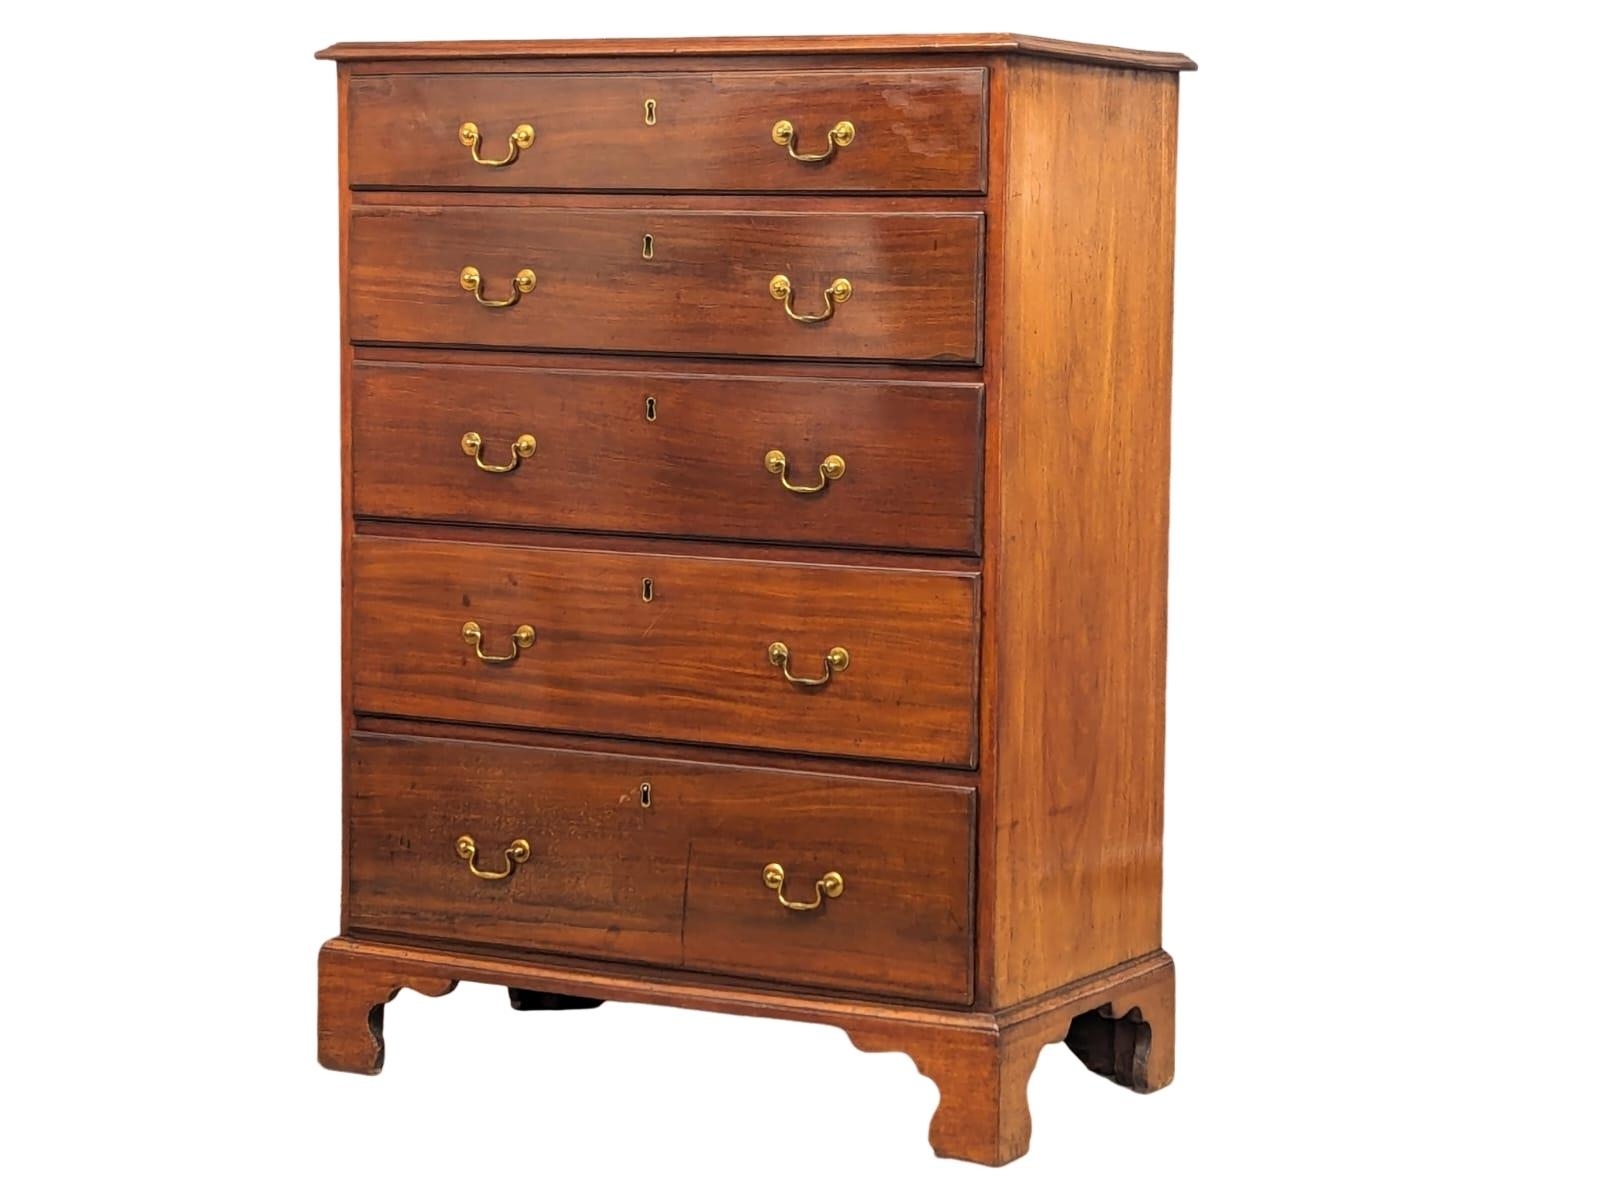 A tall good quality George III 18th Century mahogany chest of drawers on bracket feet, circa 1760-